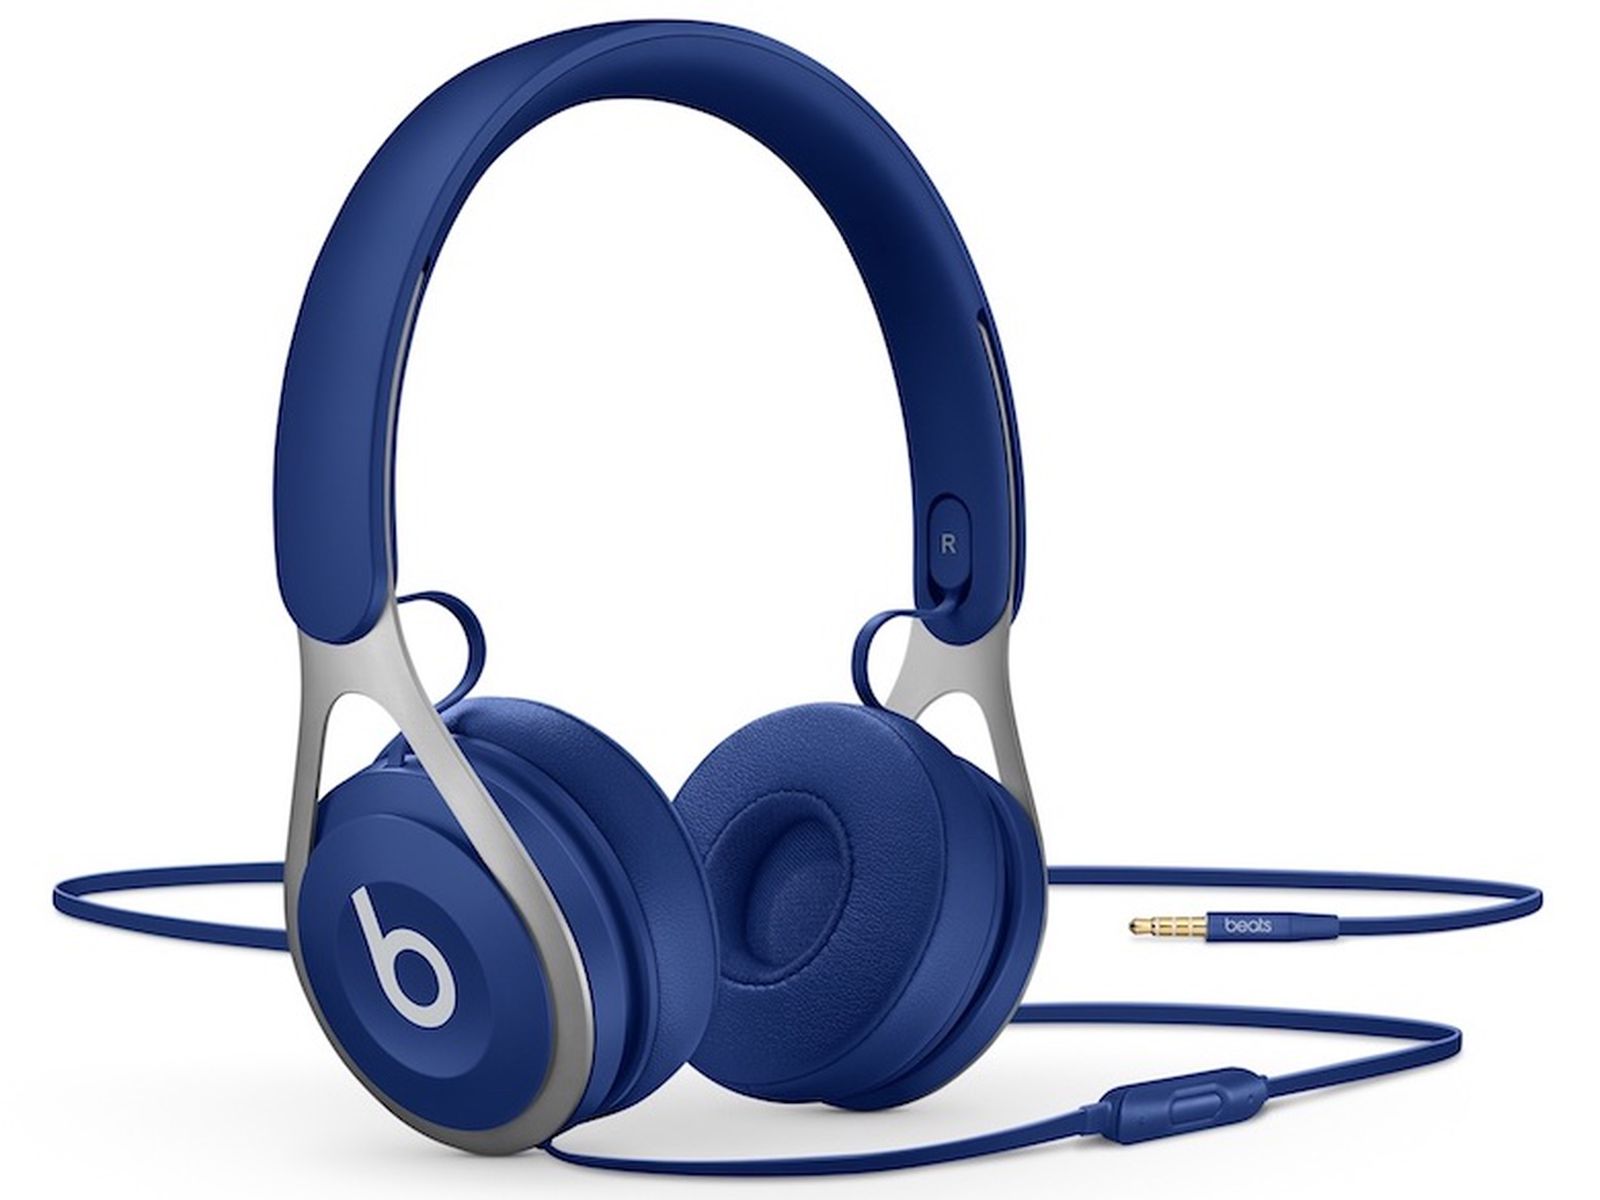 Beats Releases $130 Wired 'EP' Headphones With 3.5mm Plug MacRumors